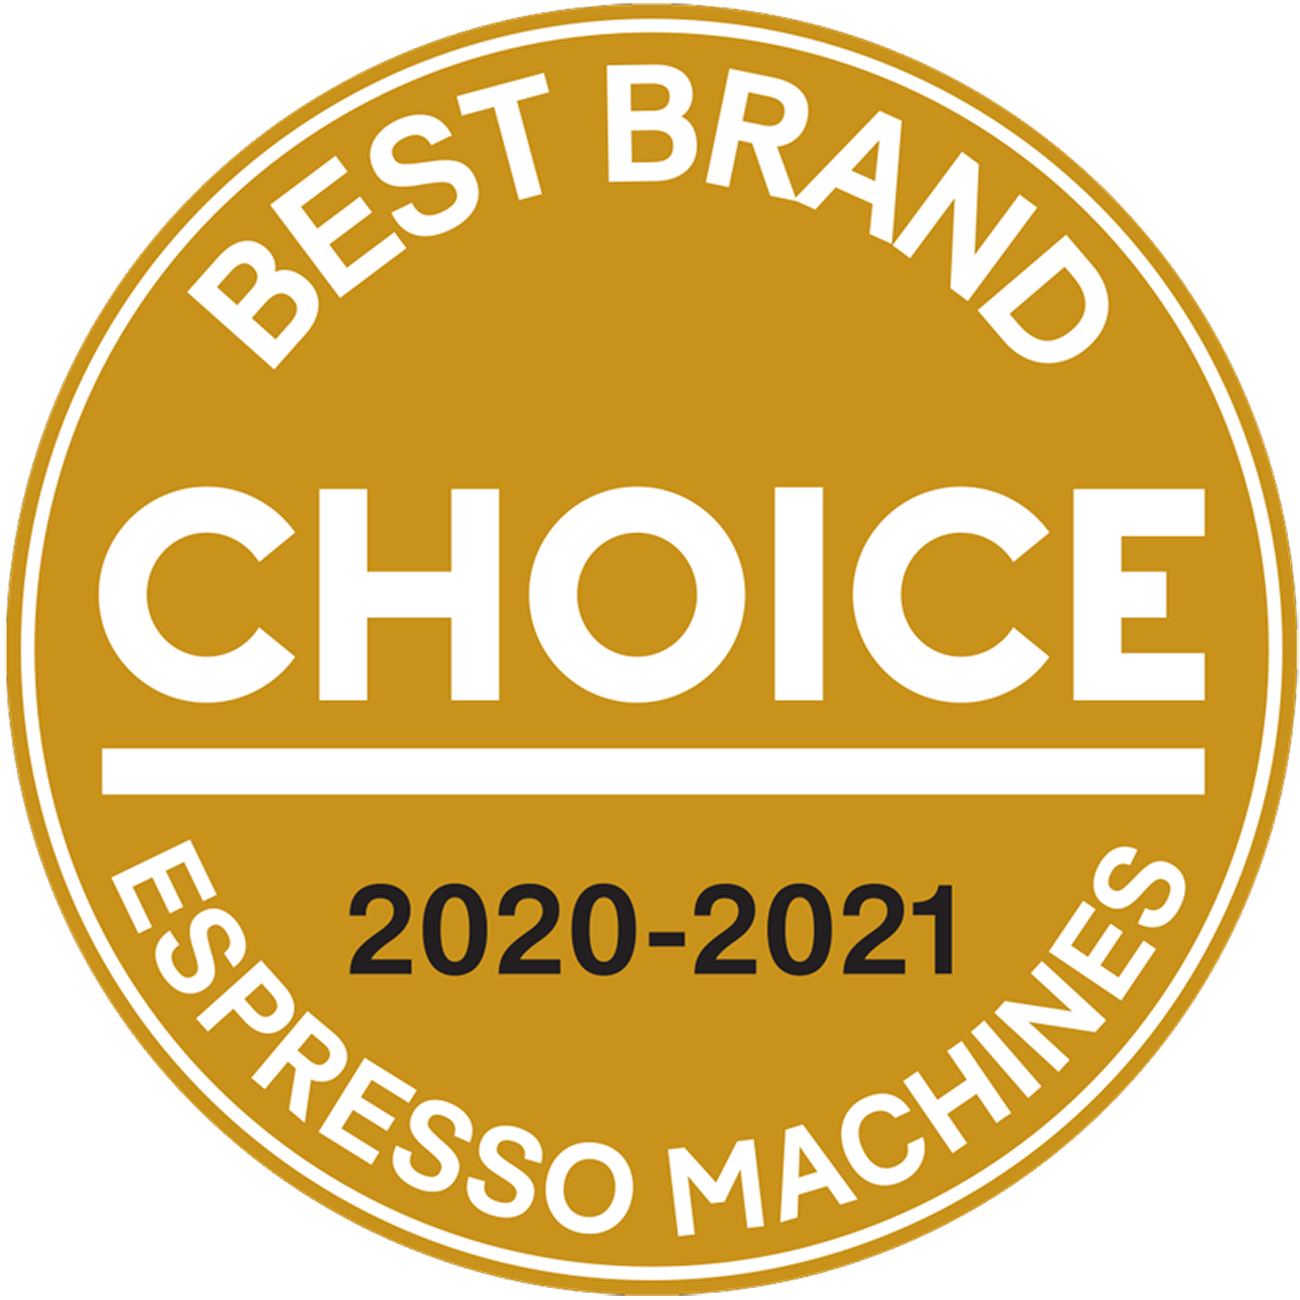  Best Espresso Brand by Choice 2020 -2021